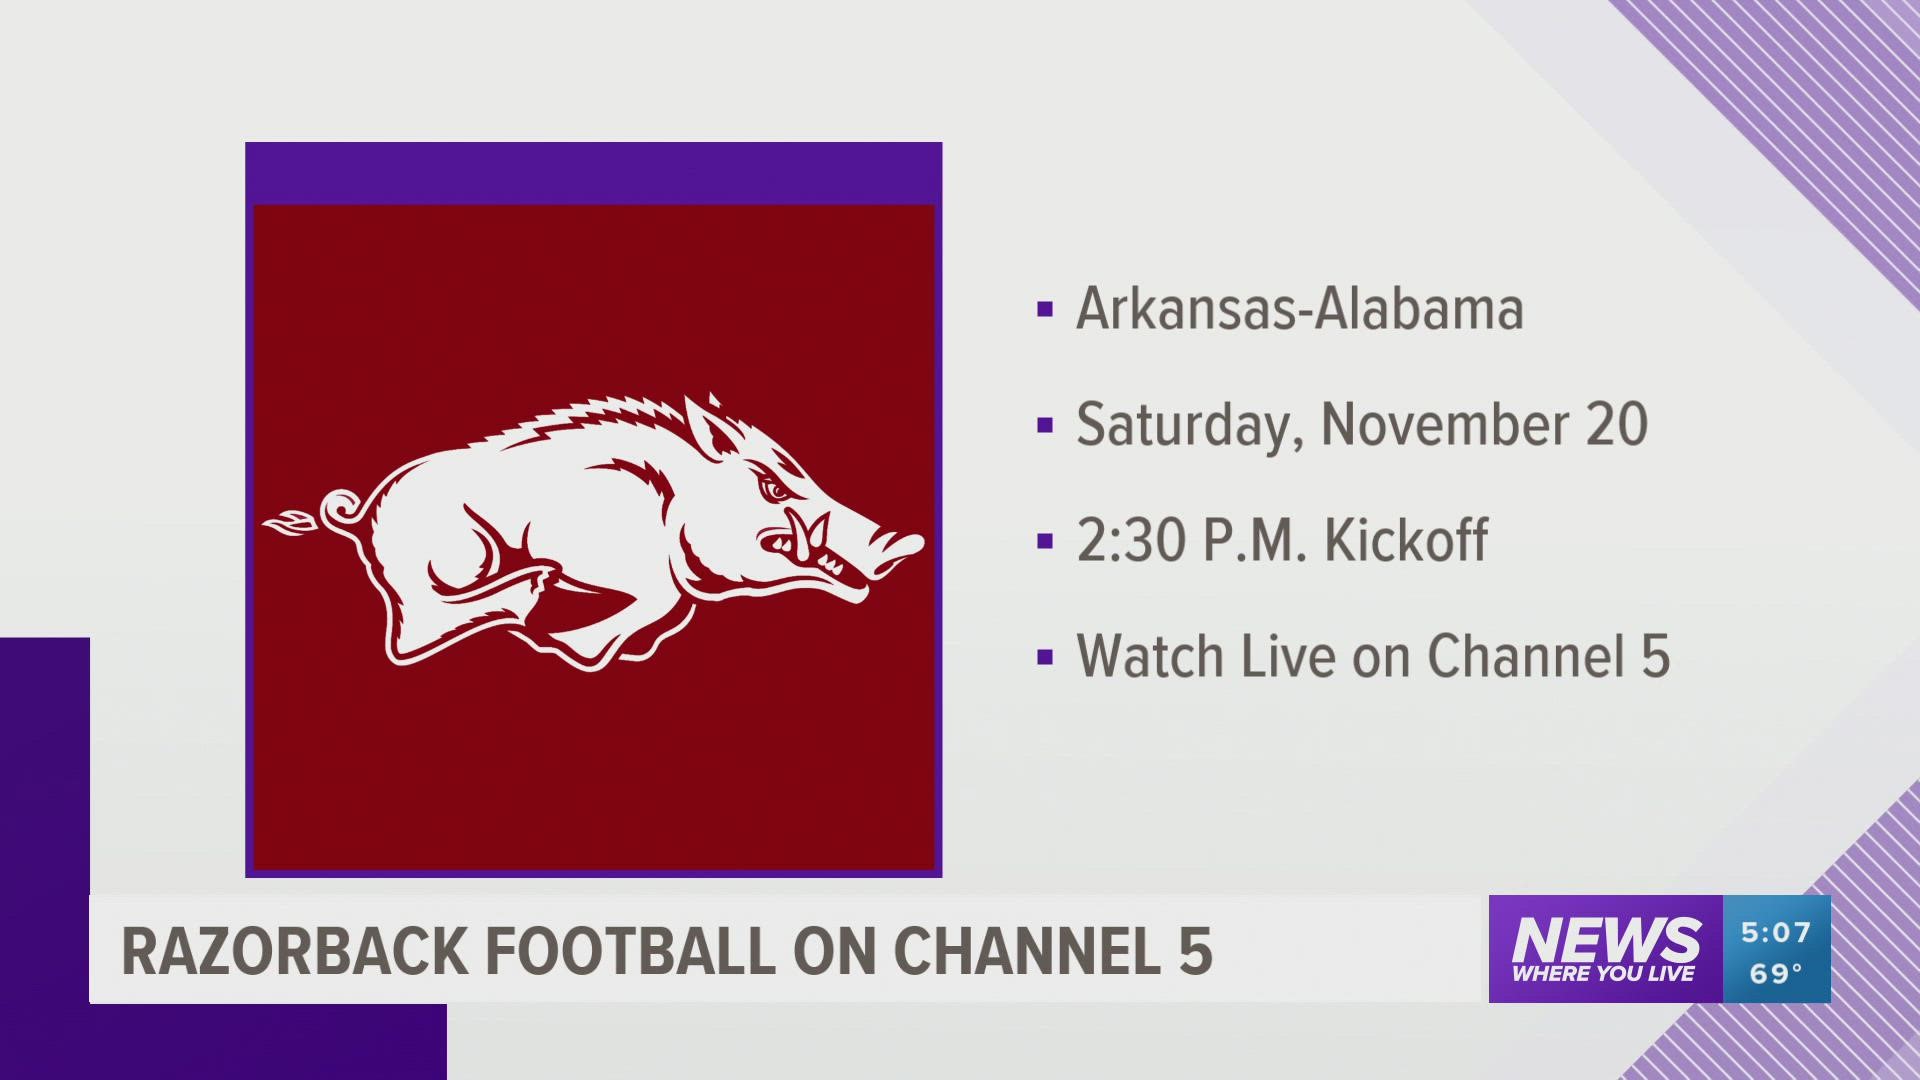 The Razorbacks will take on Alabama on Nov. 20 at 2:30 p.m.